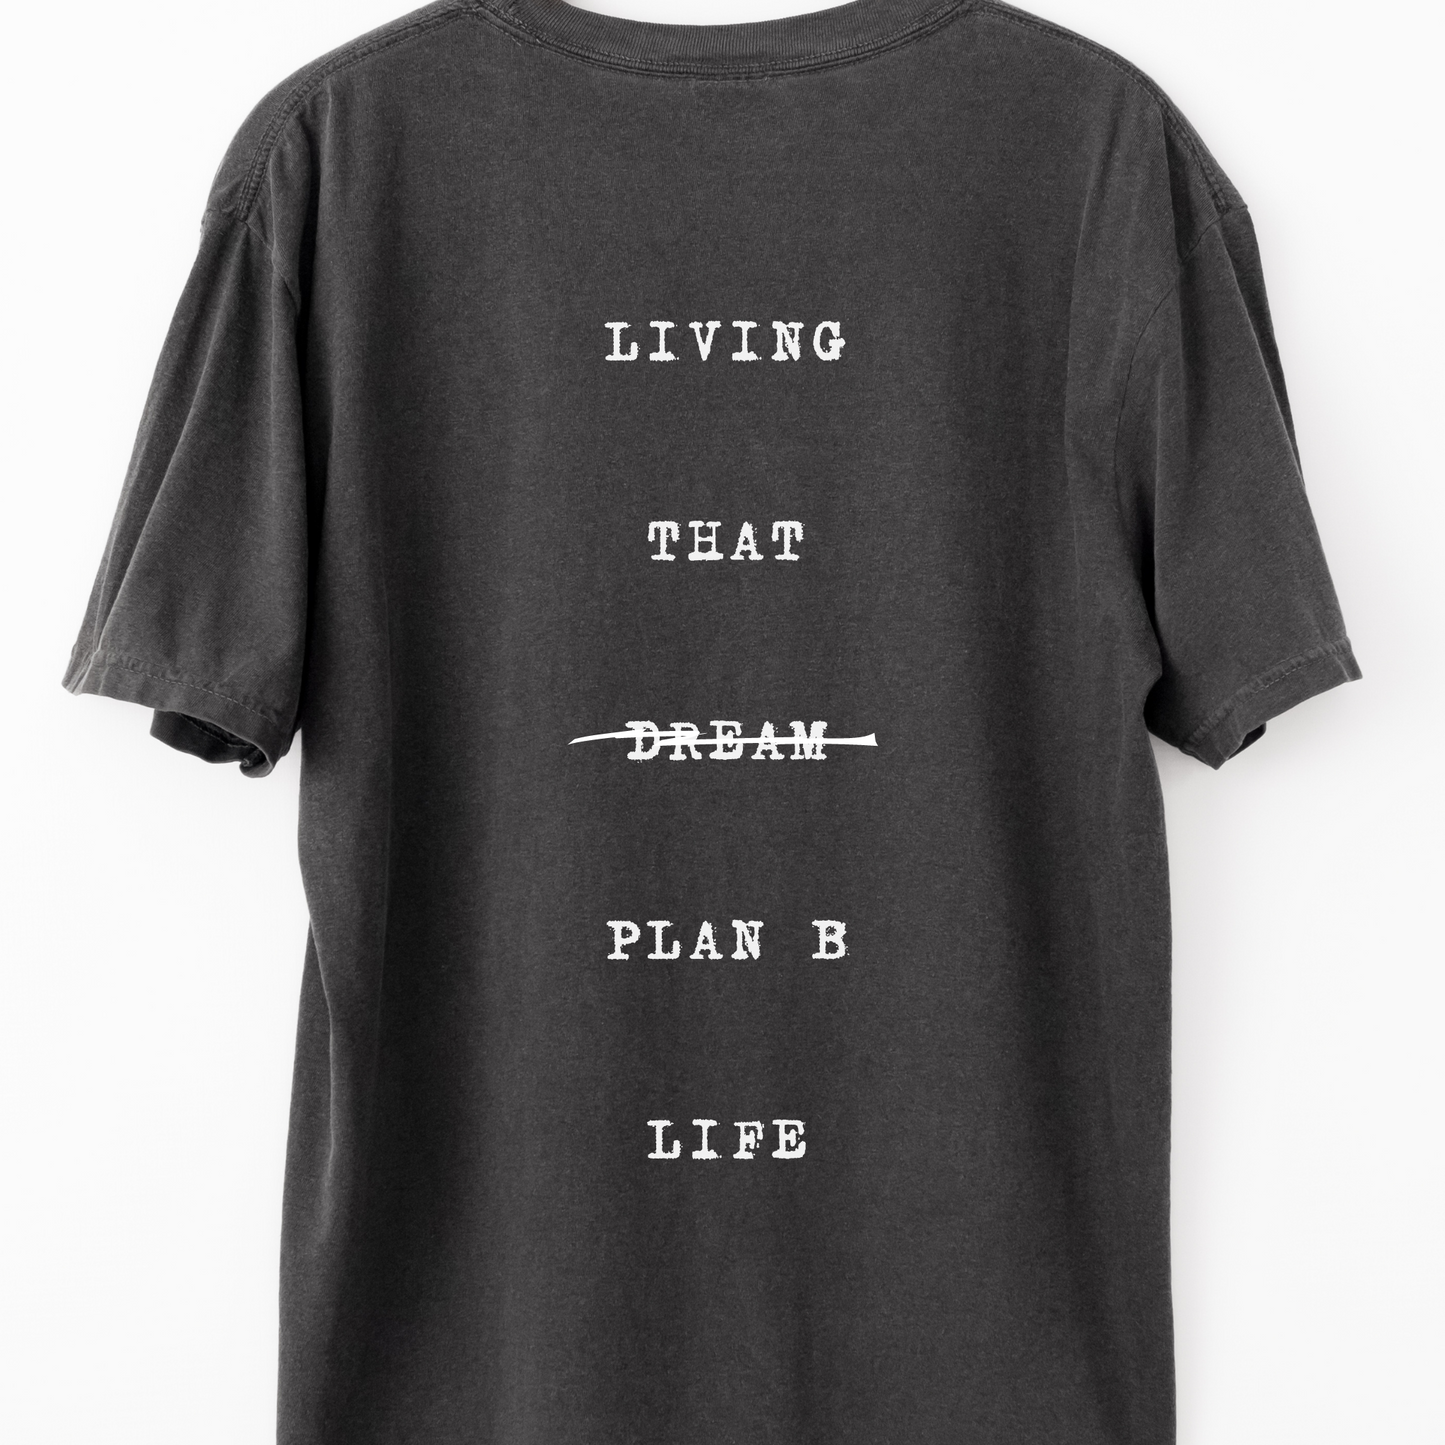 That Dream Life T-Shirt